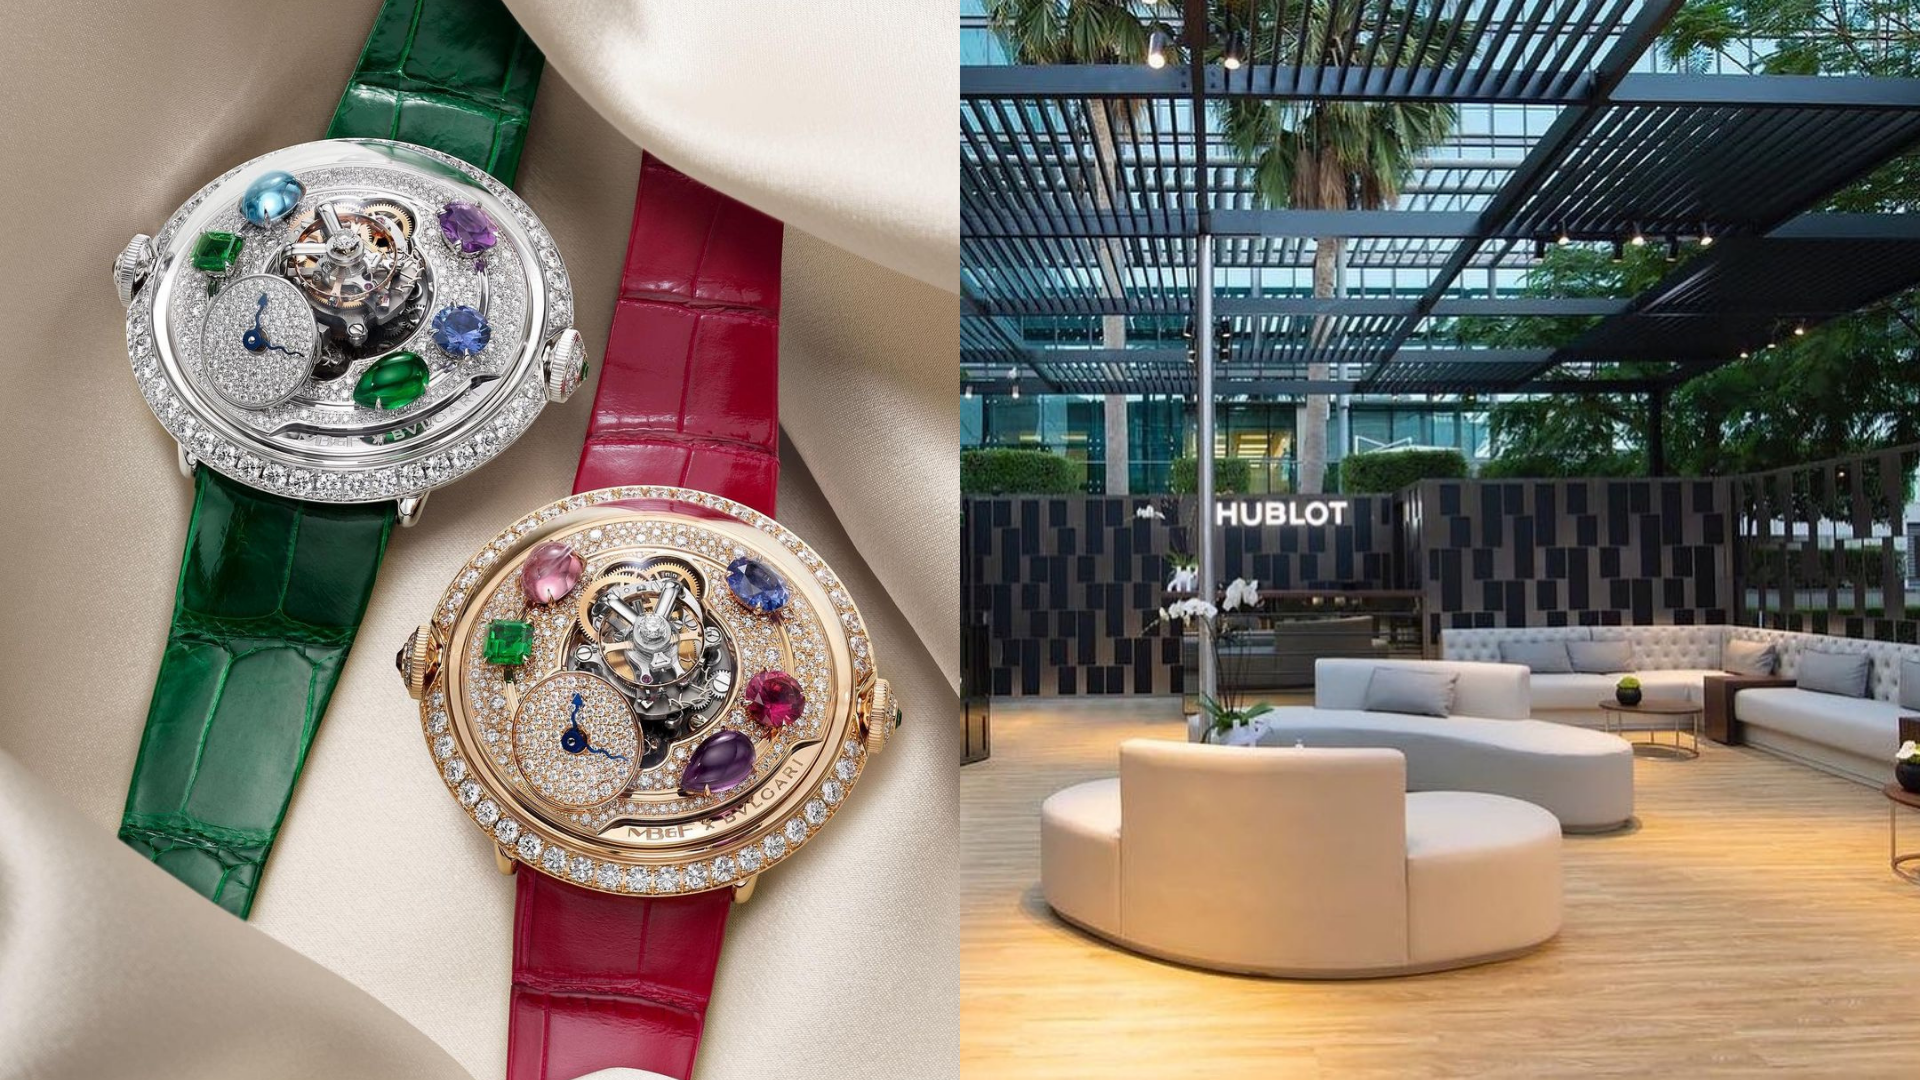 Halda Watch Co. at the Expo 2020 in Dubai - Halda Watches